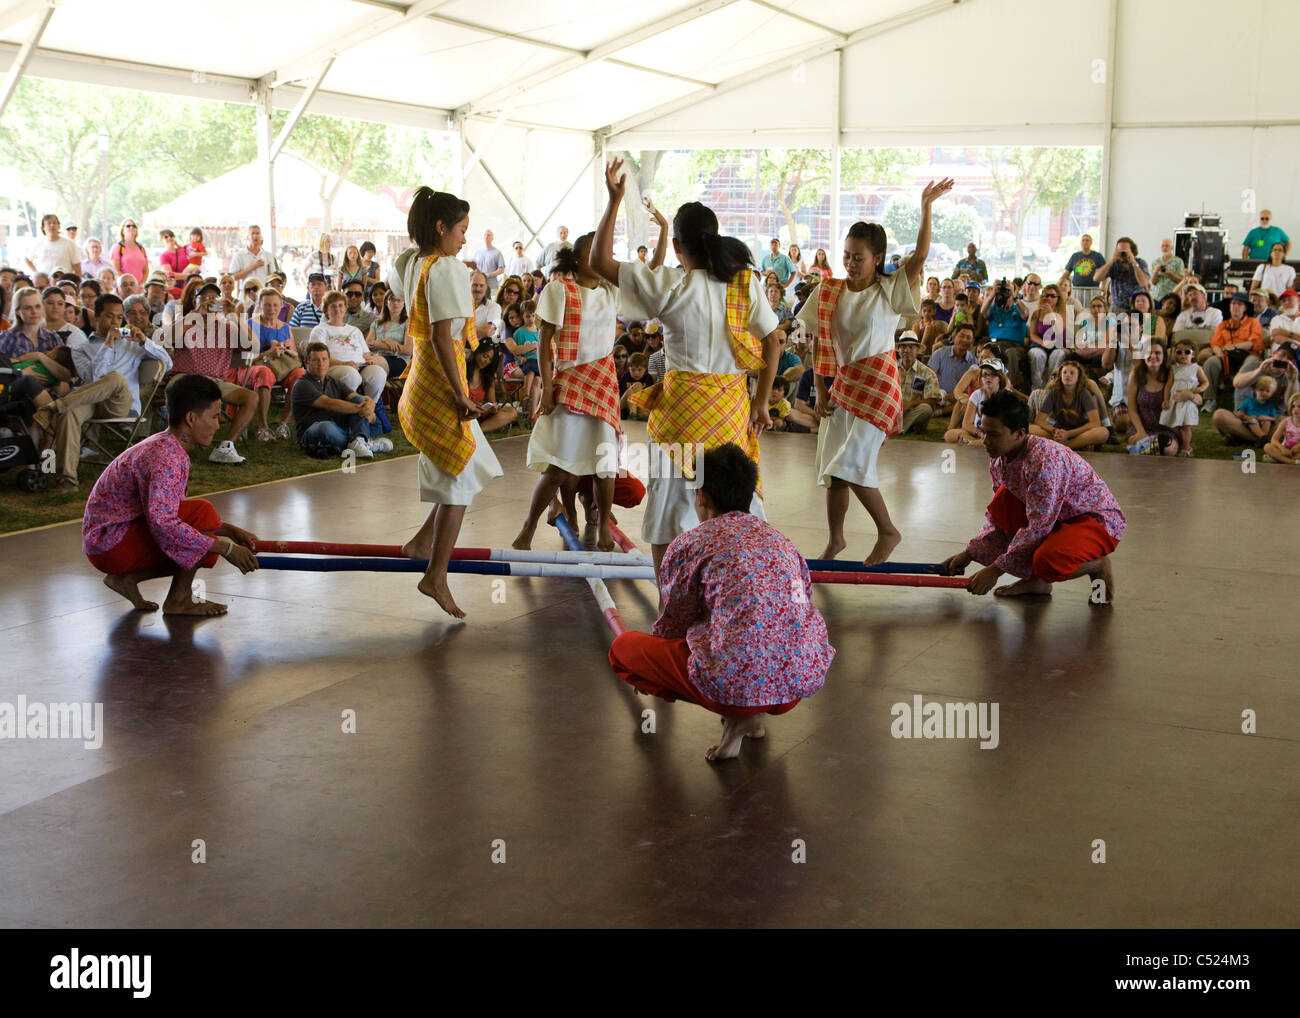 Tinikling (Philippine folk dance) performers on stage - Smithsonian Folklife Festival, Washington, DC USA Stock Photo